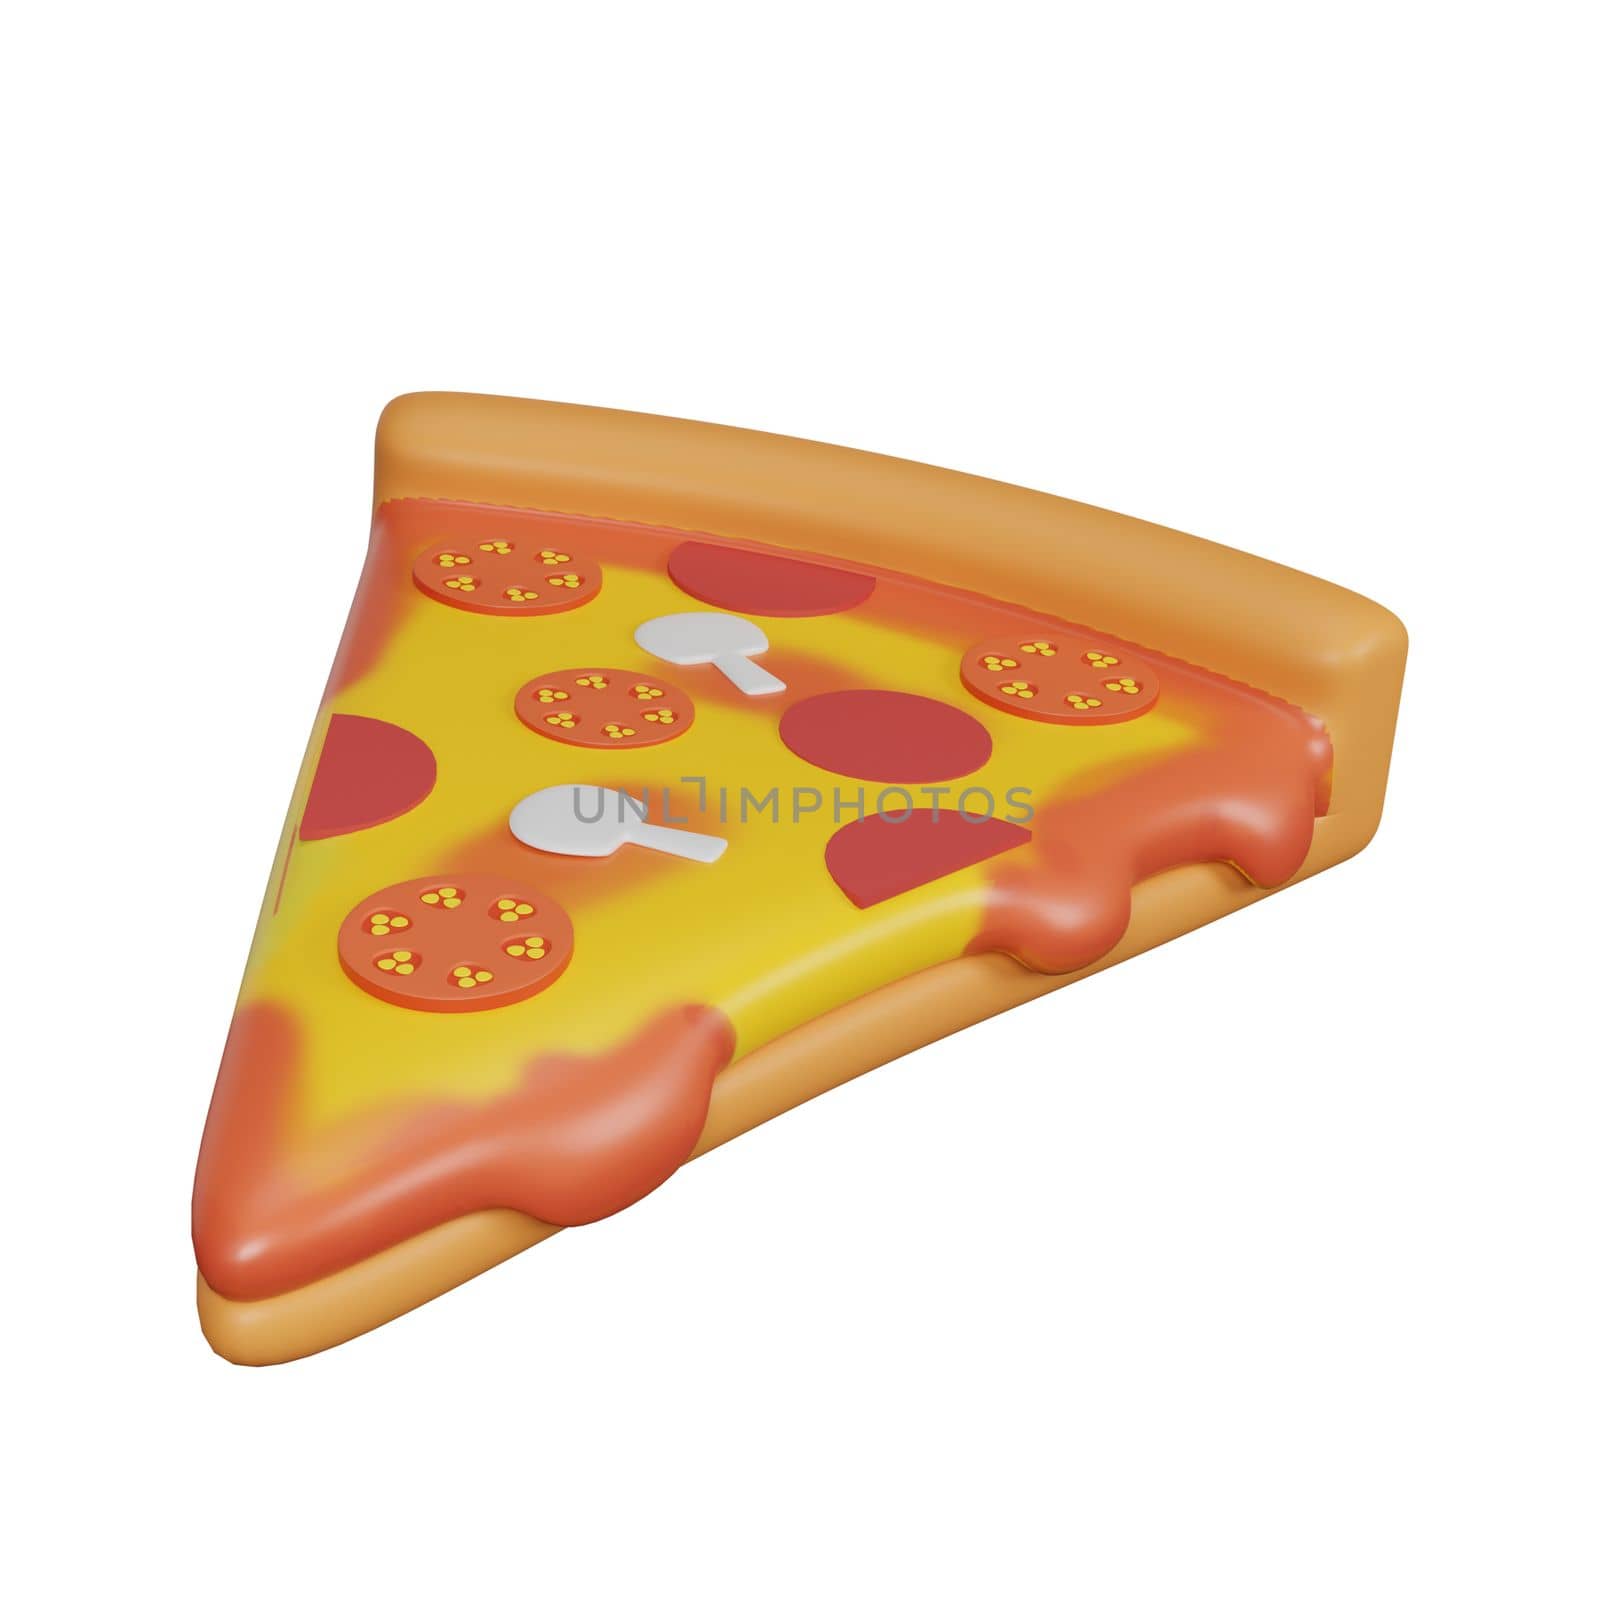 3d rendering of pizza junk food icon by Rahmat_Djayusman